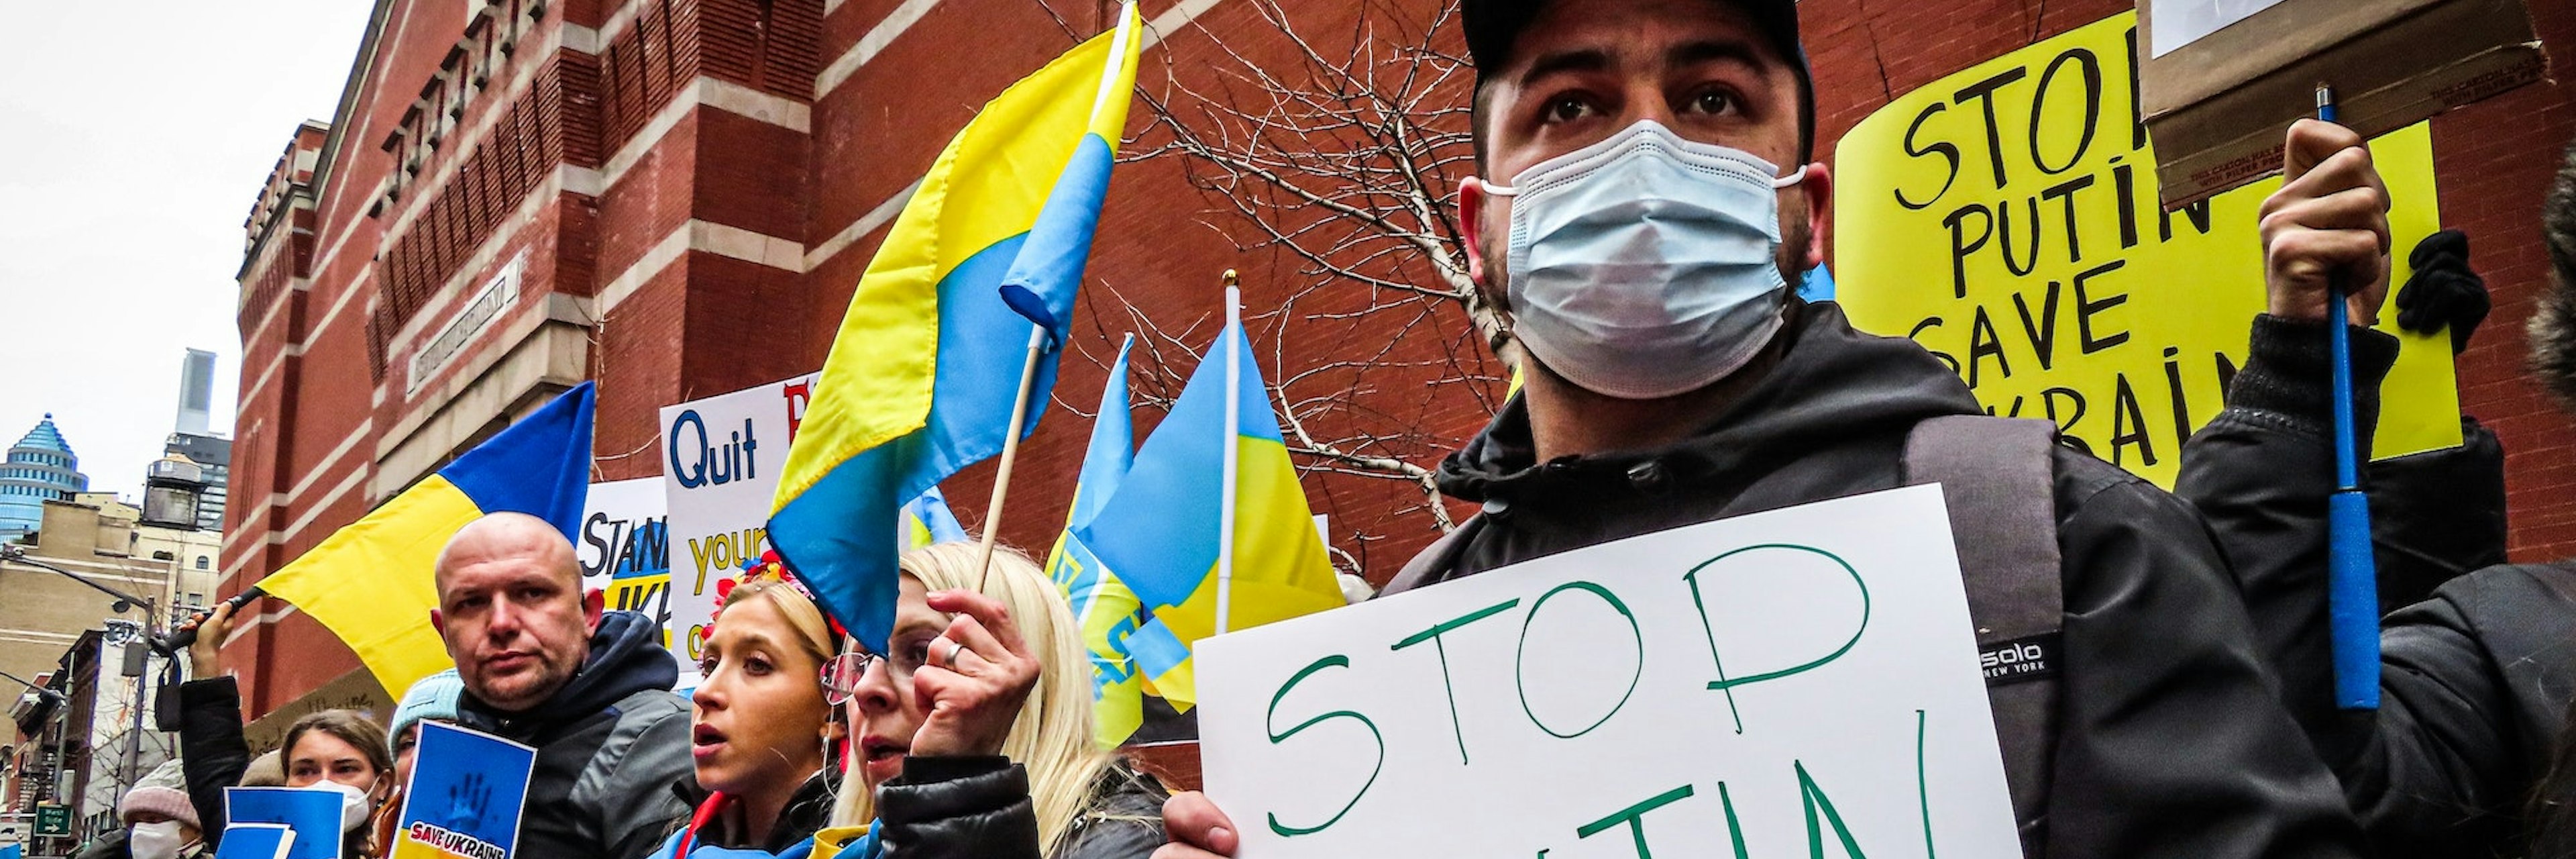 Demonstrators protest Russia's invasion of Ukraine